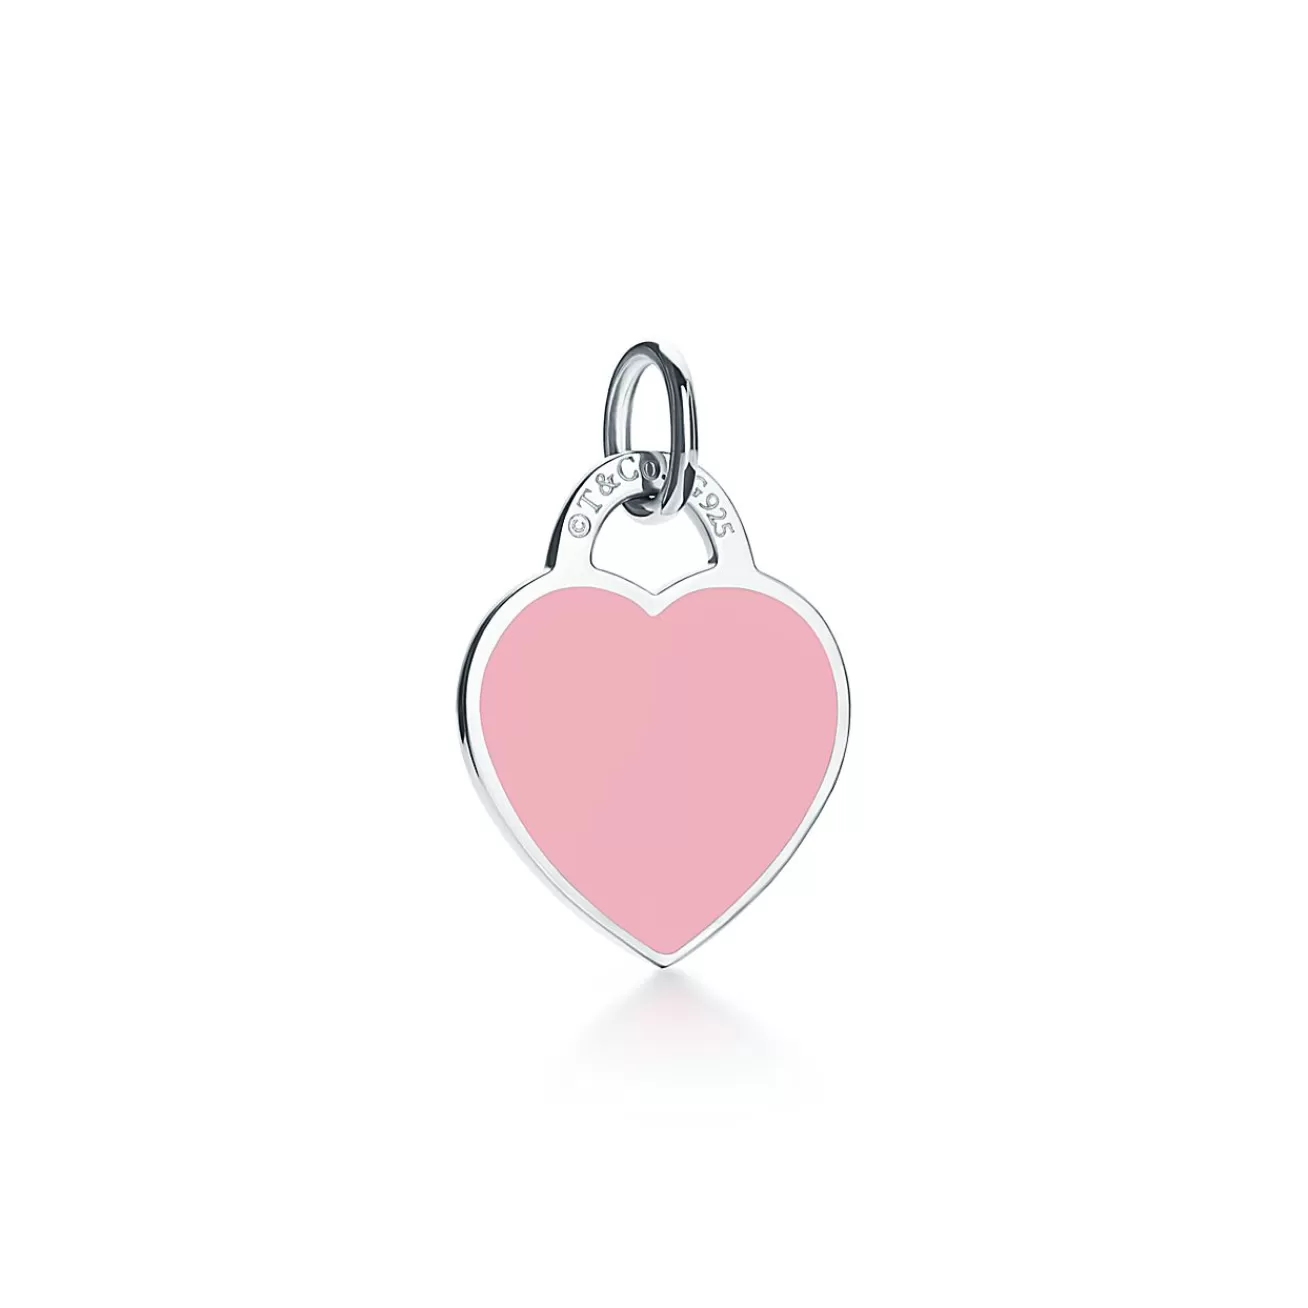 Tiffany & Co. Return to Tiffany® Pink Heart Tag Charm in Silver, Small | ^ Return to Tiffany®